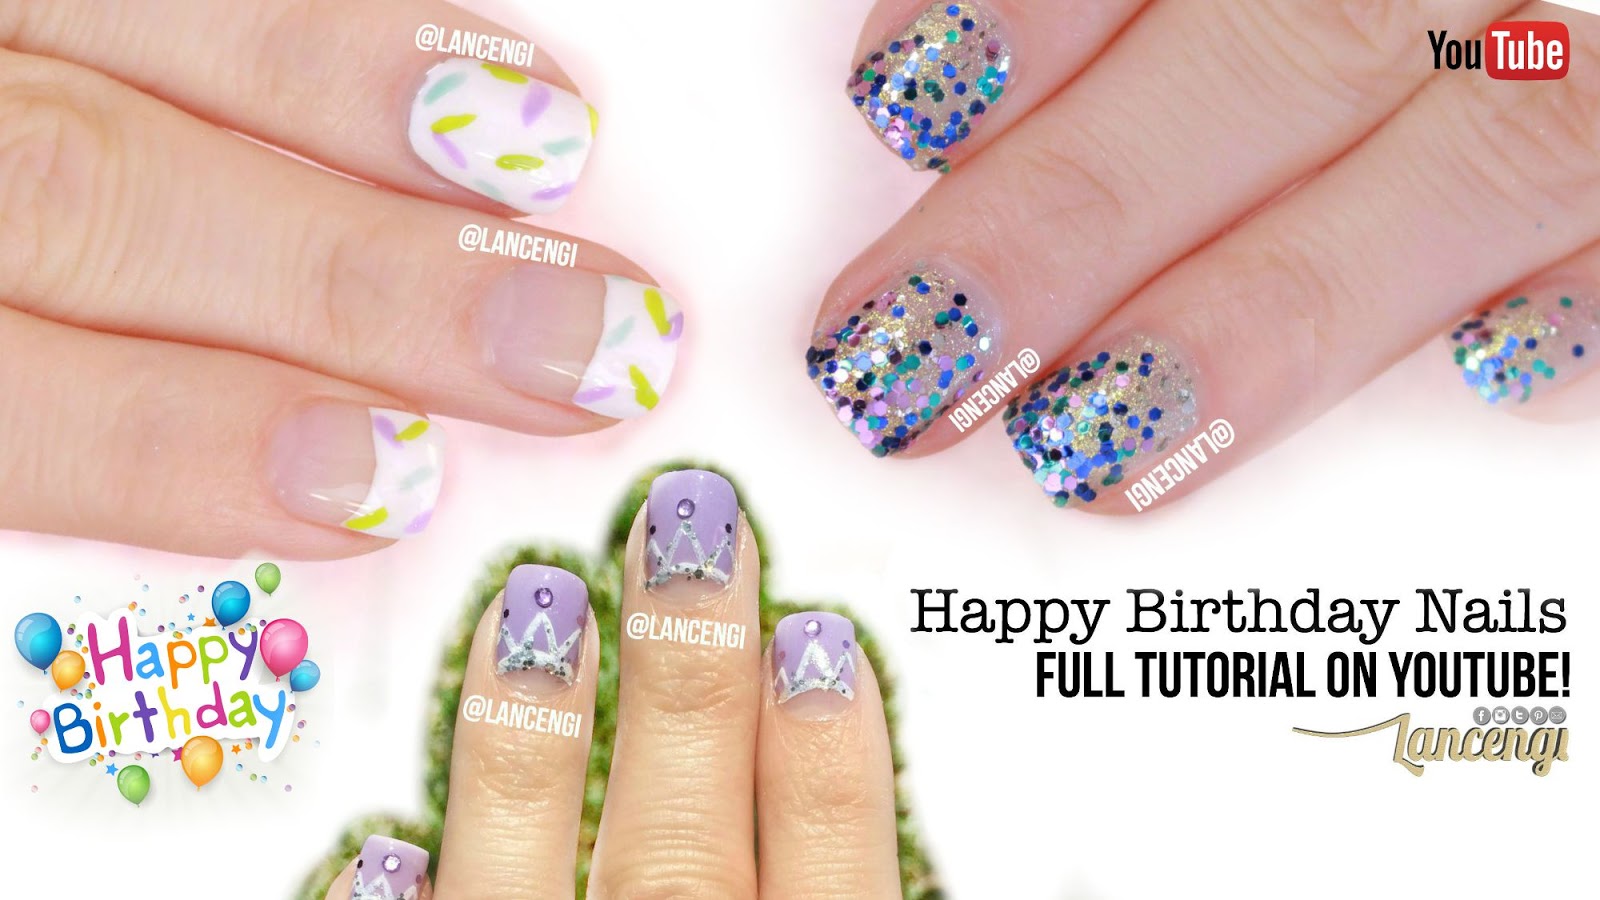 2. Pinterest Birthday Nails - wide 2